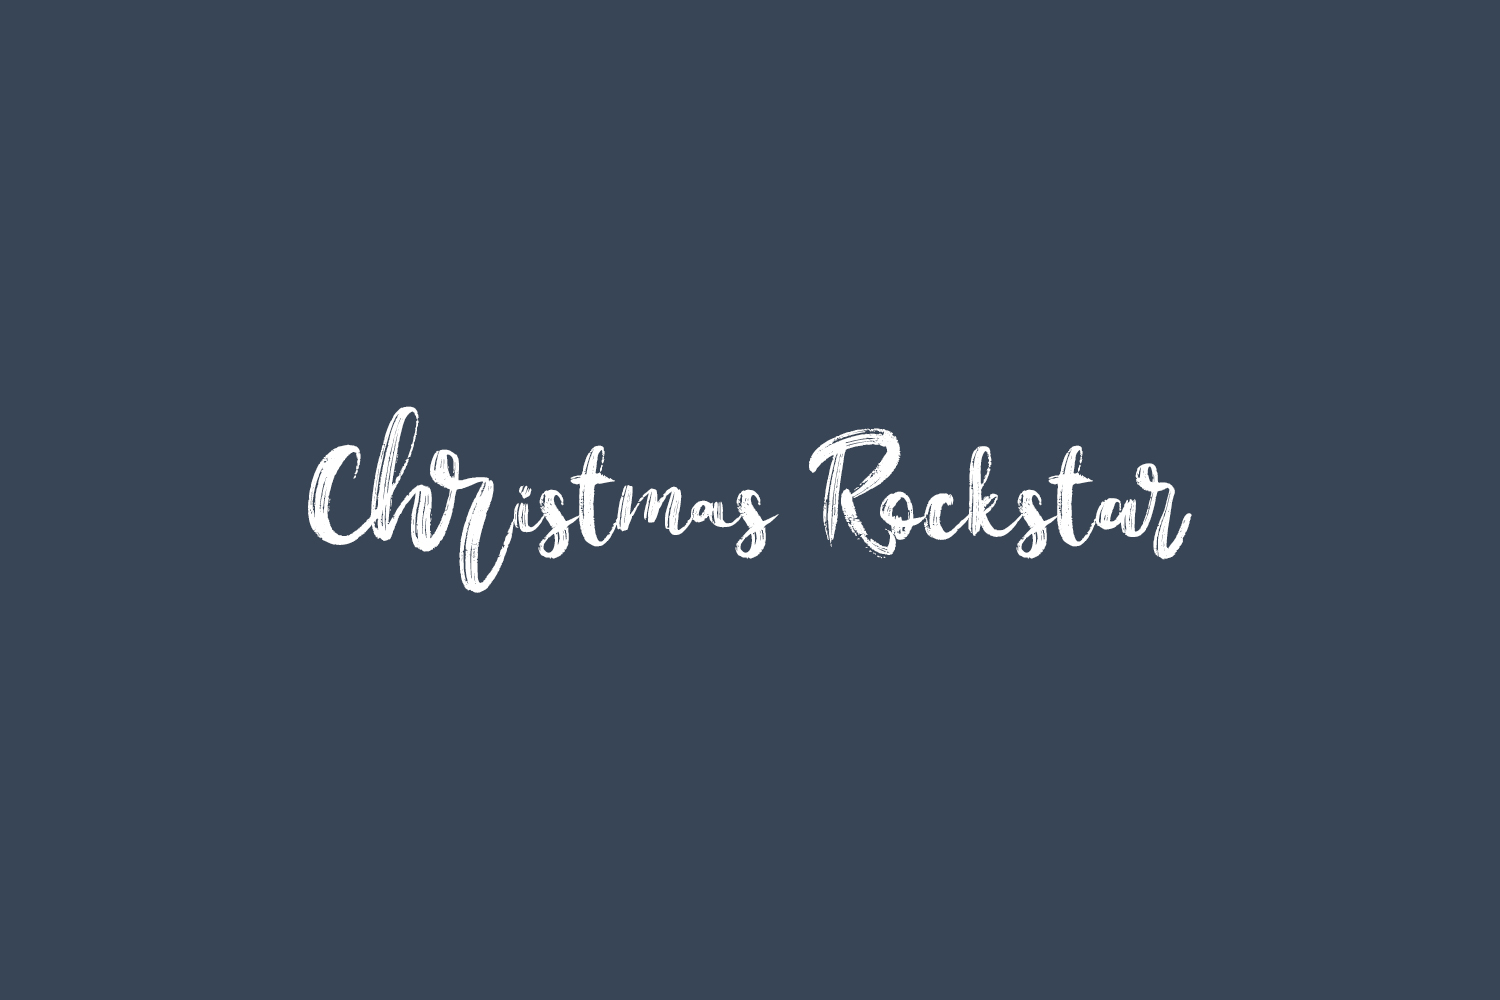 Christmas Rockstar Free Font